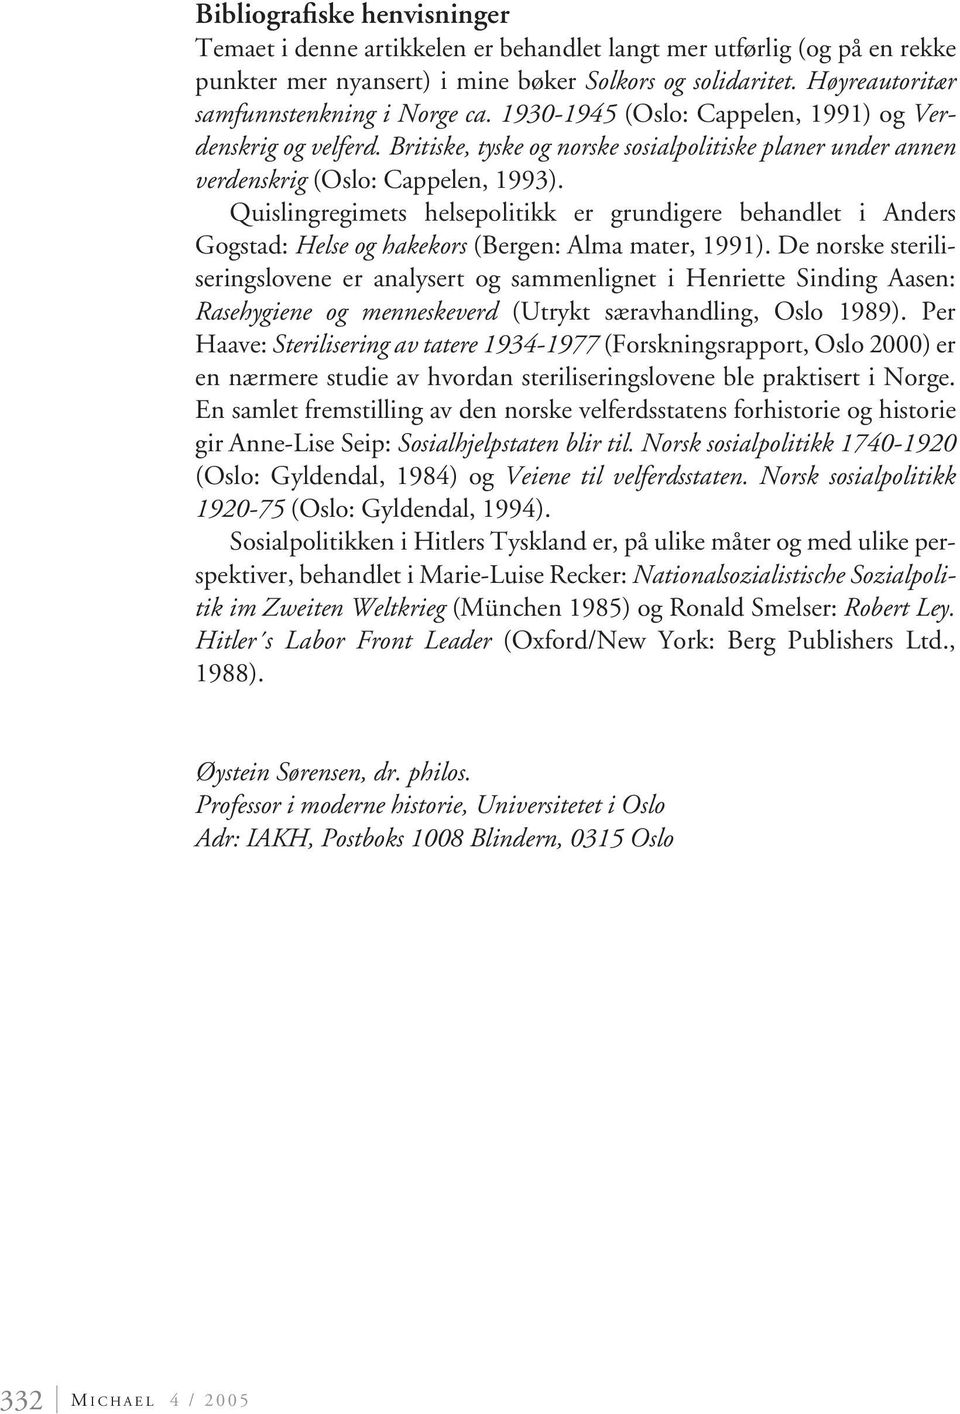 Quislingregimets helsepolitikk er grundigere behandlet i Anders Gogstad: Helse og hakekors (Bergen: Alma mater, 1991).